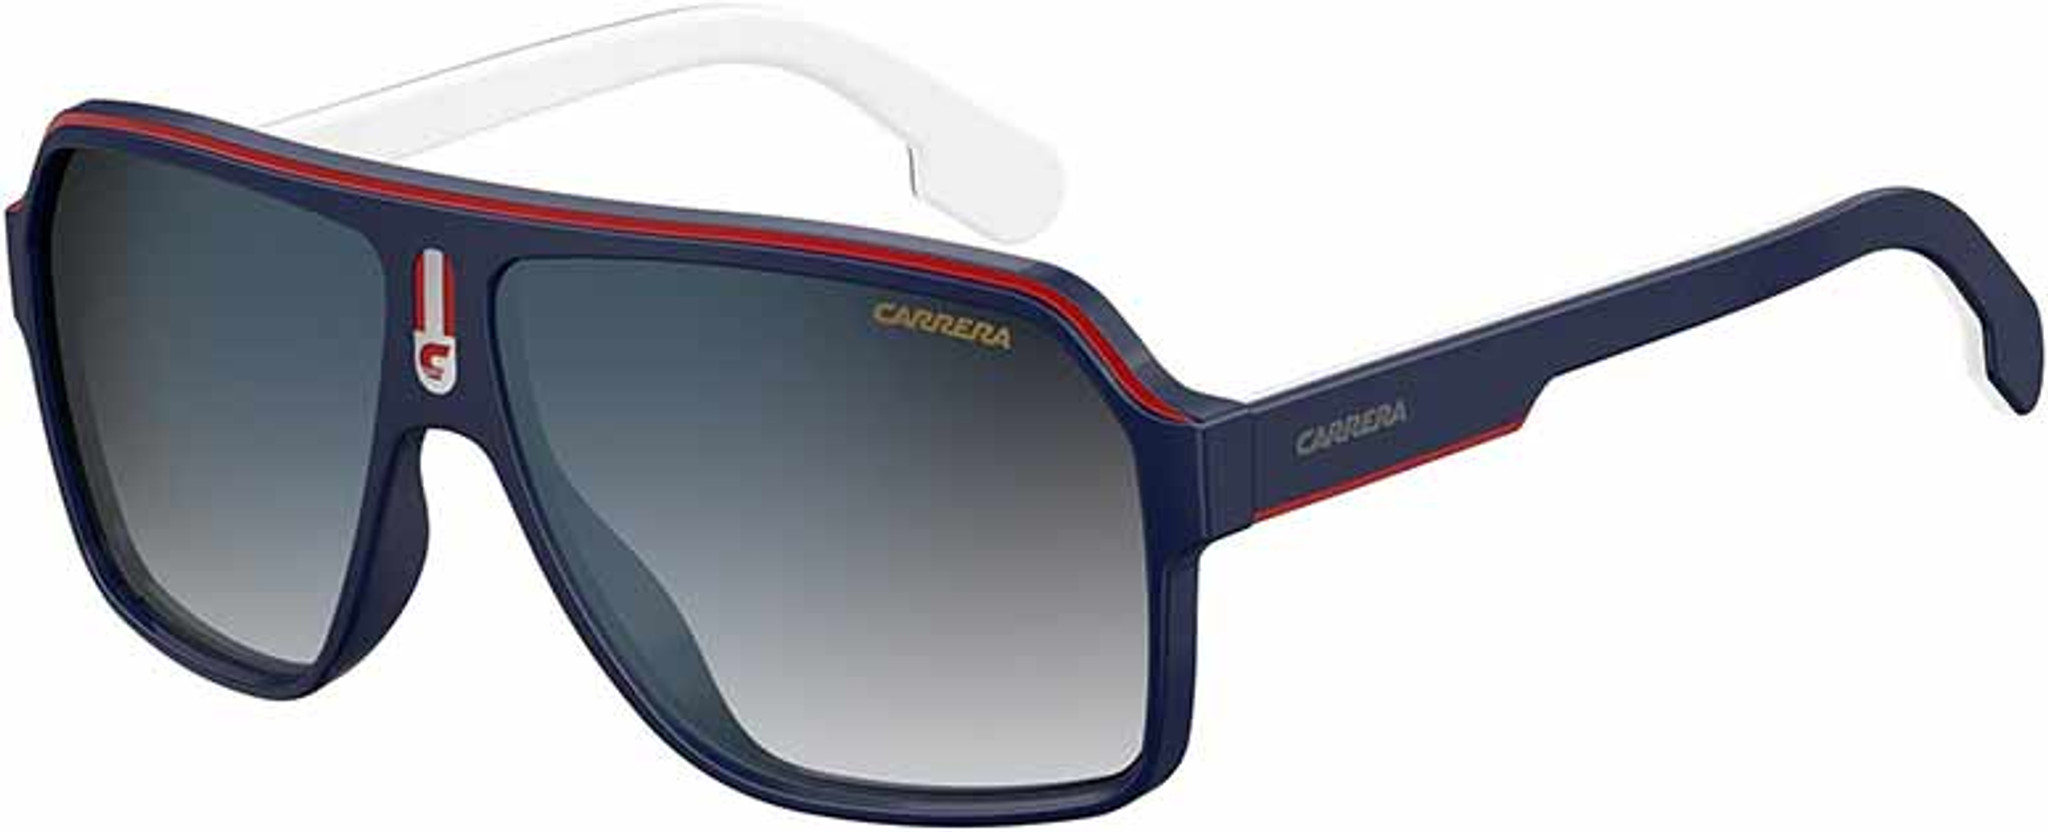 Carrera 1001-S Sunglasses Extra Large Aviator Prescription